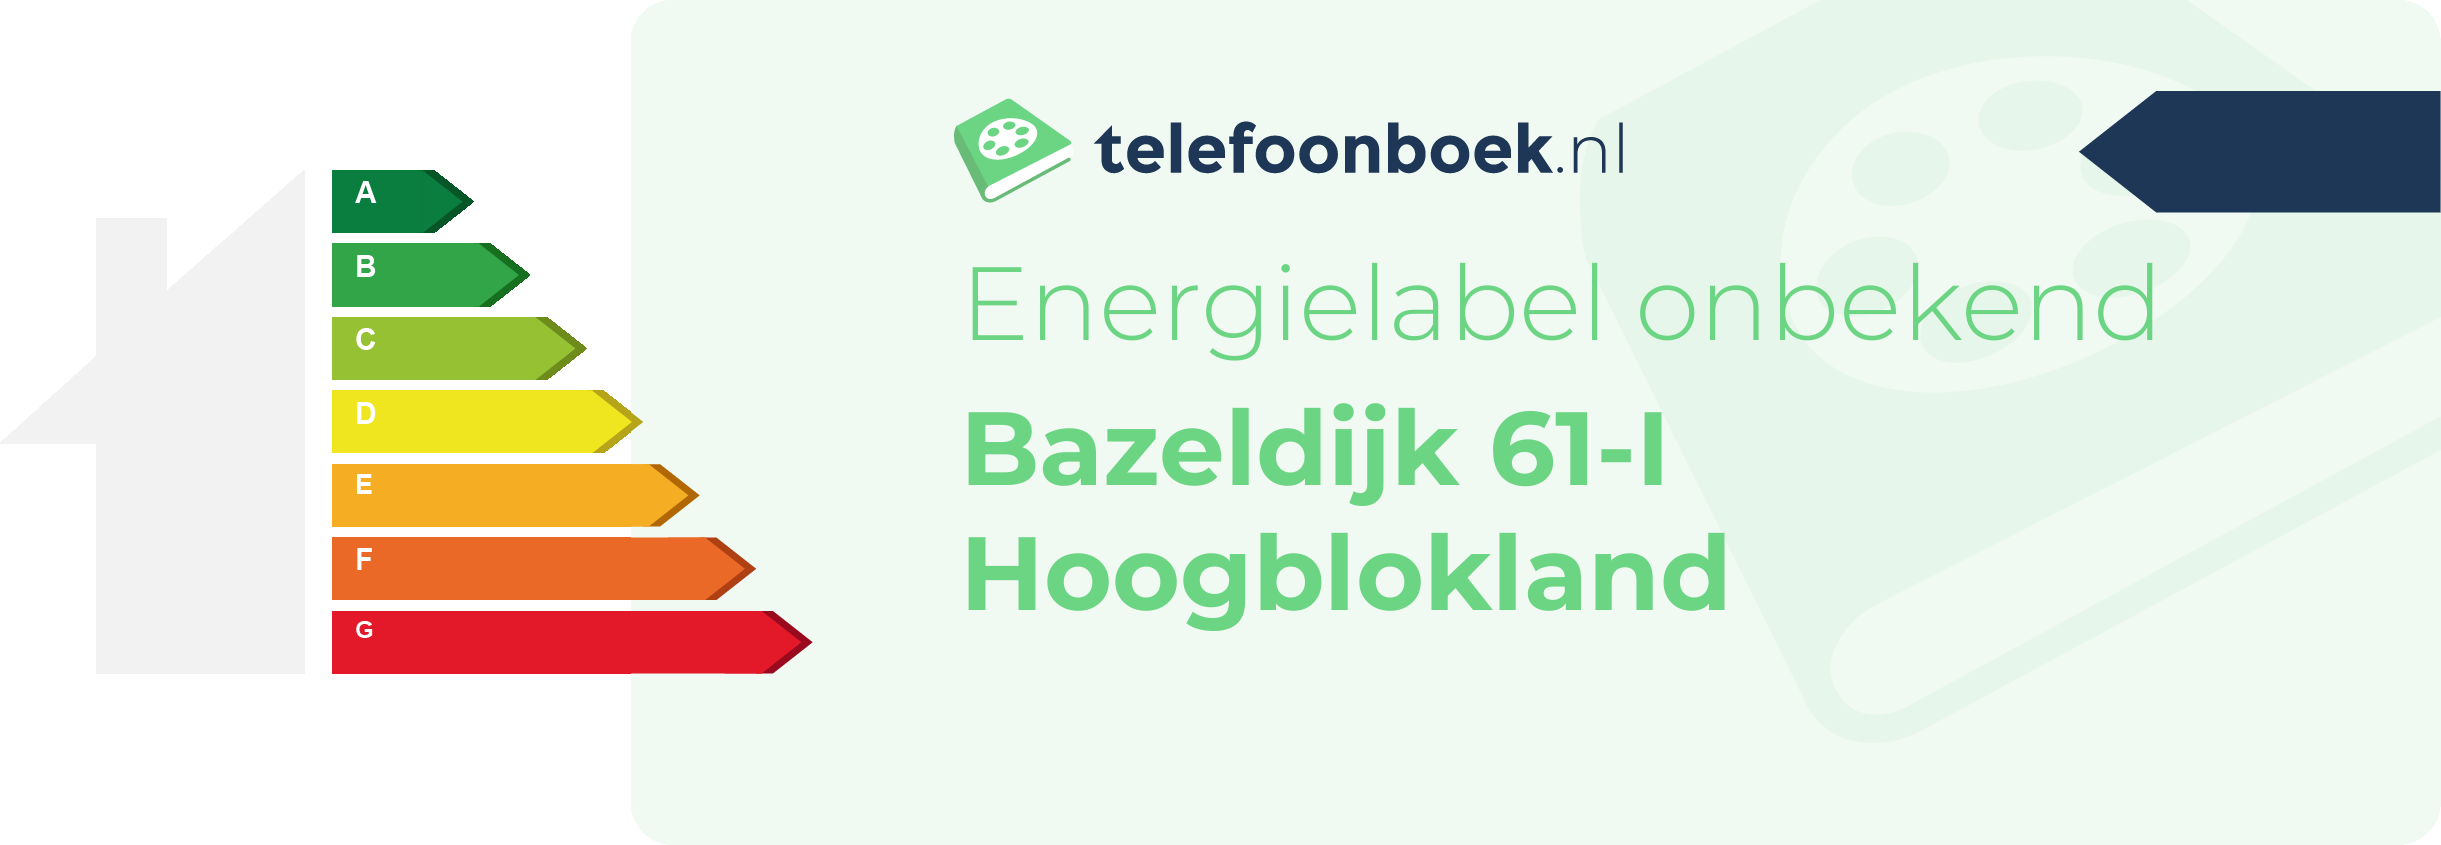 Energielabel Bazeldijk 61-I Hoogblokland